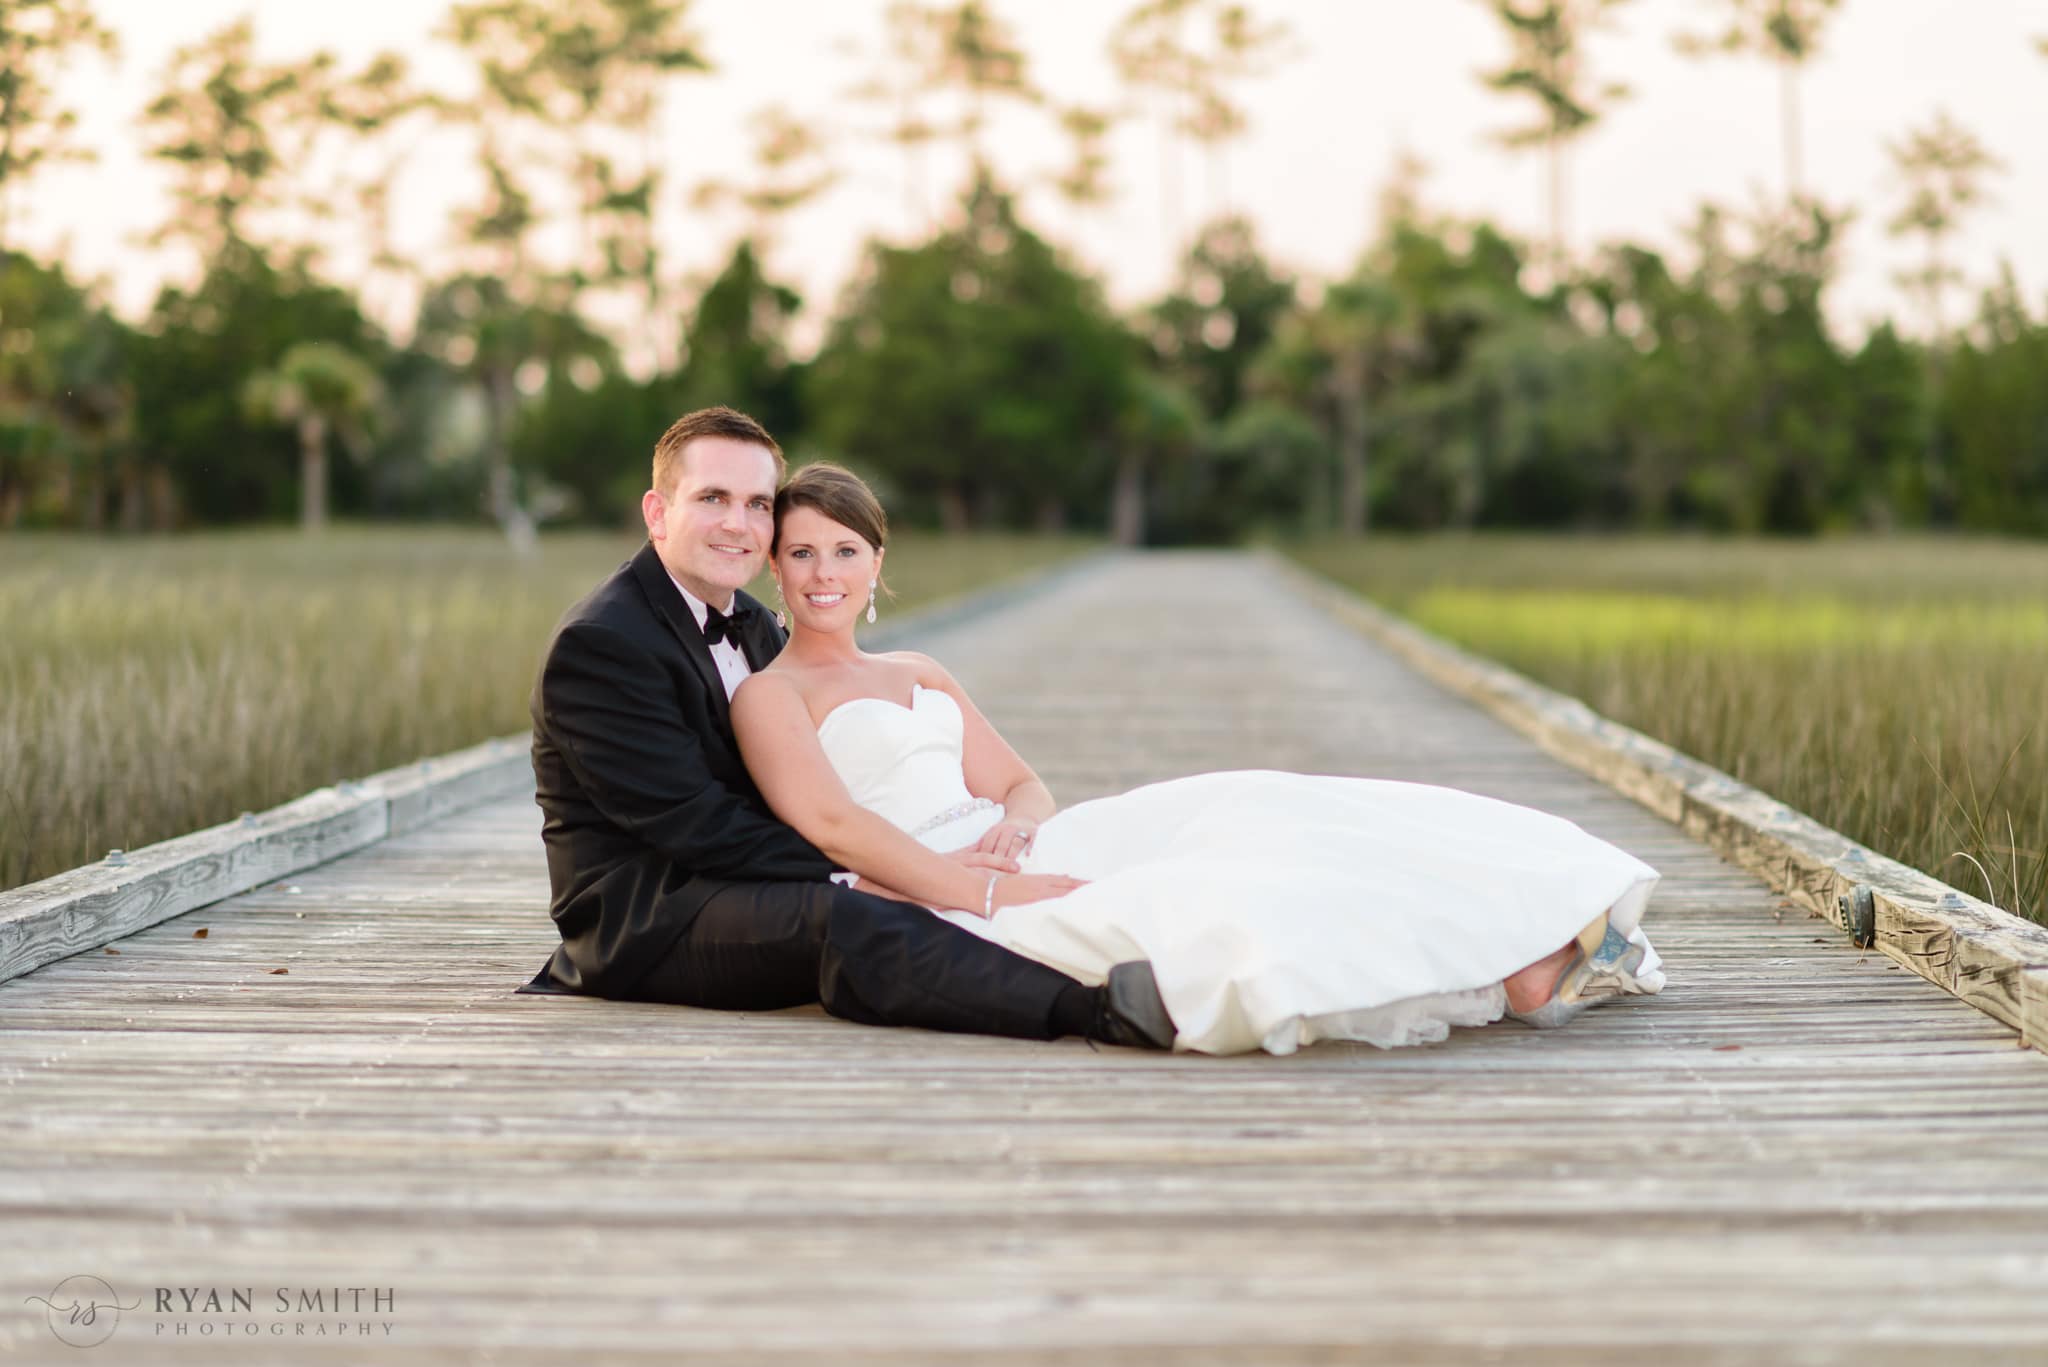 Couple laying together on the boardwalk - Daniel Island Club - Charleston, SC